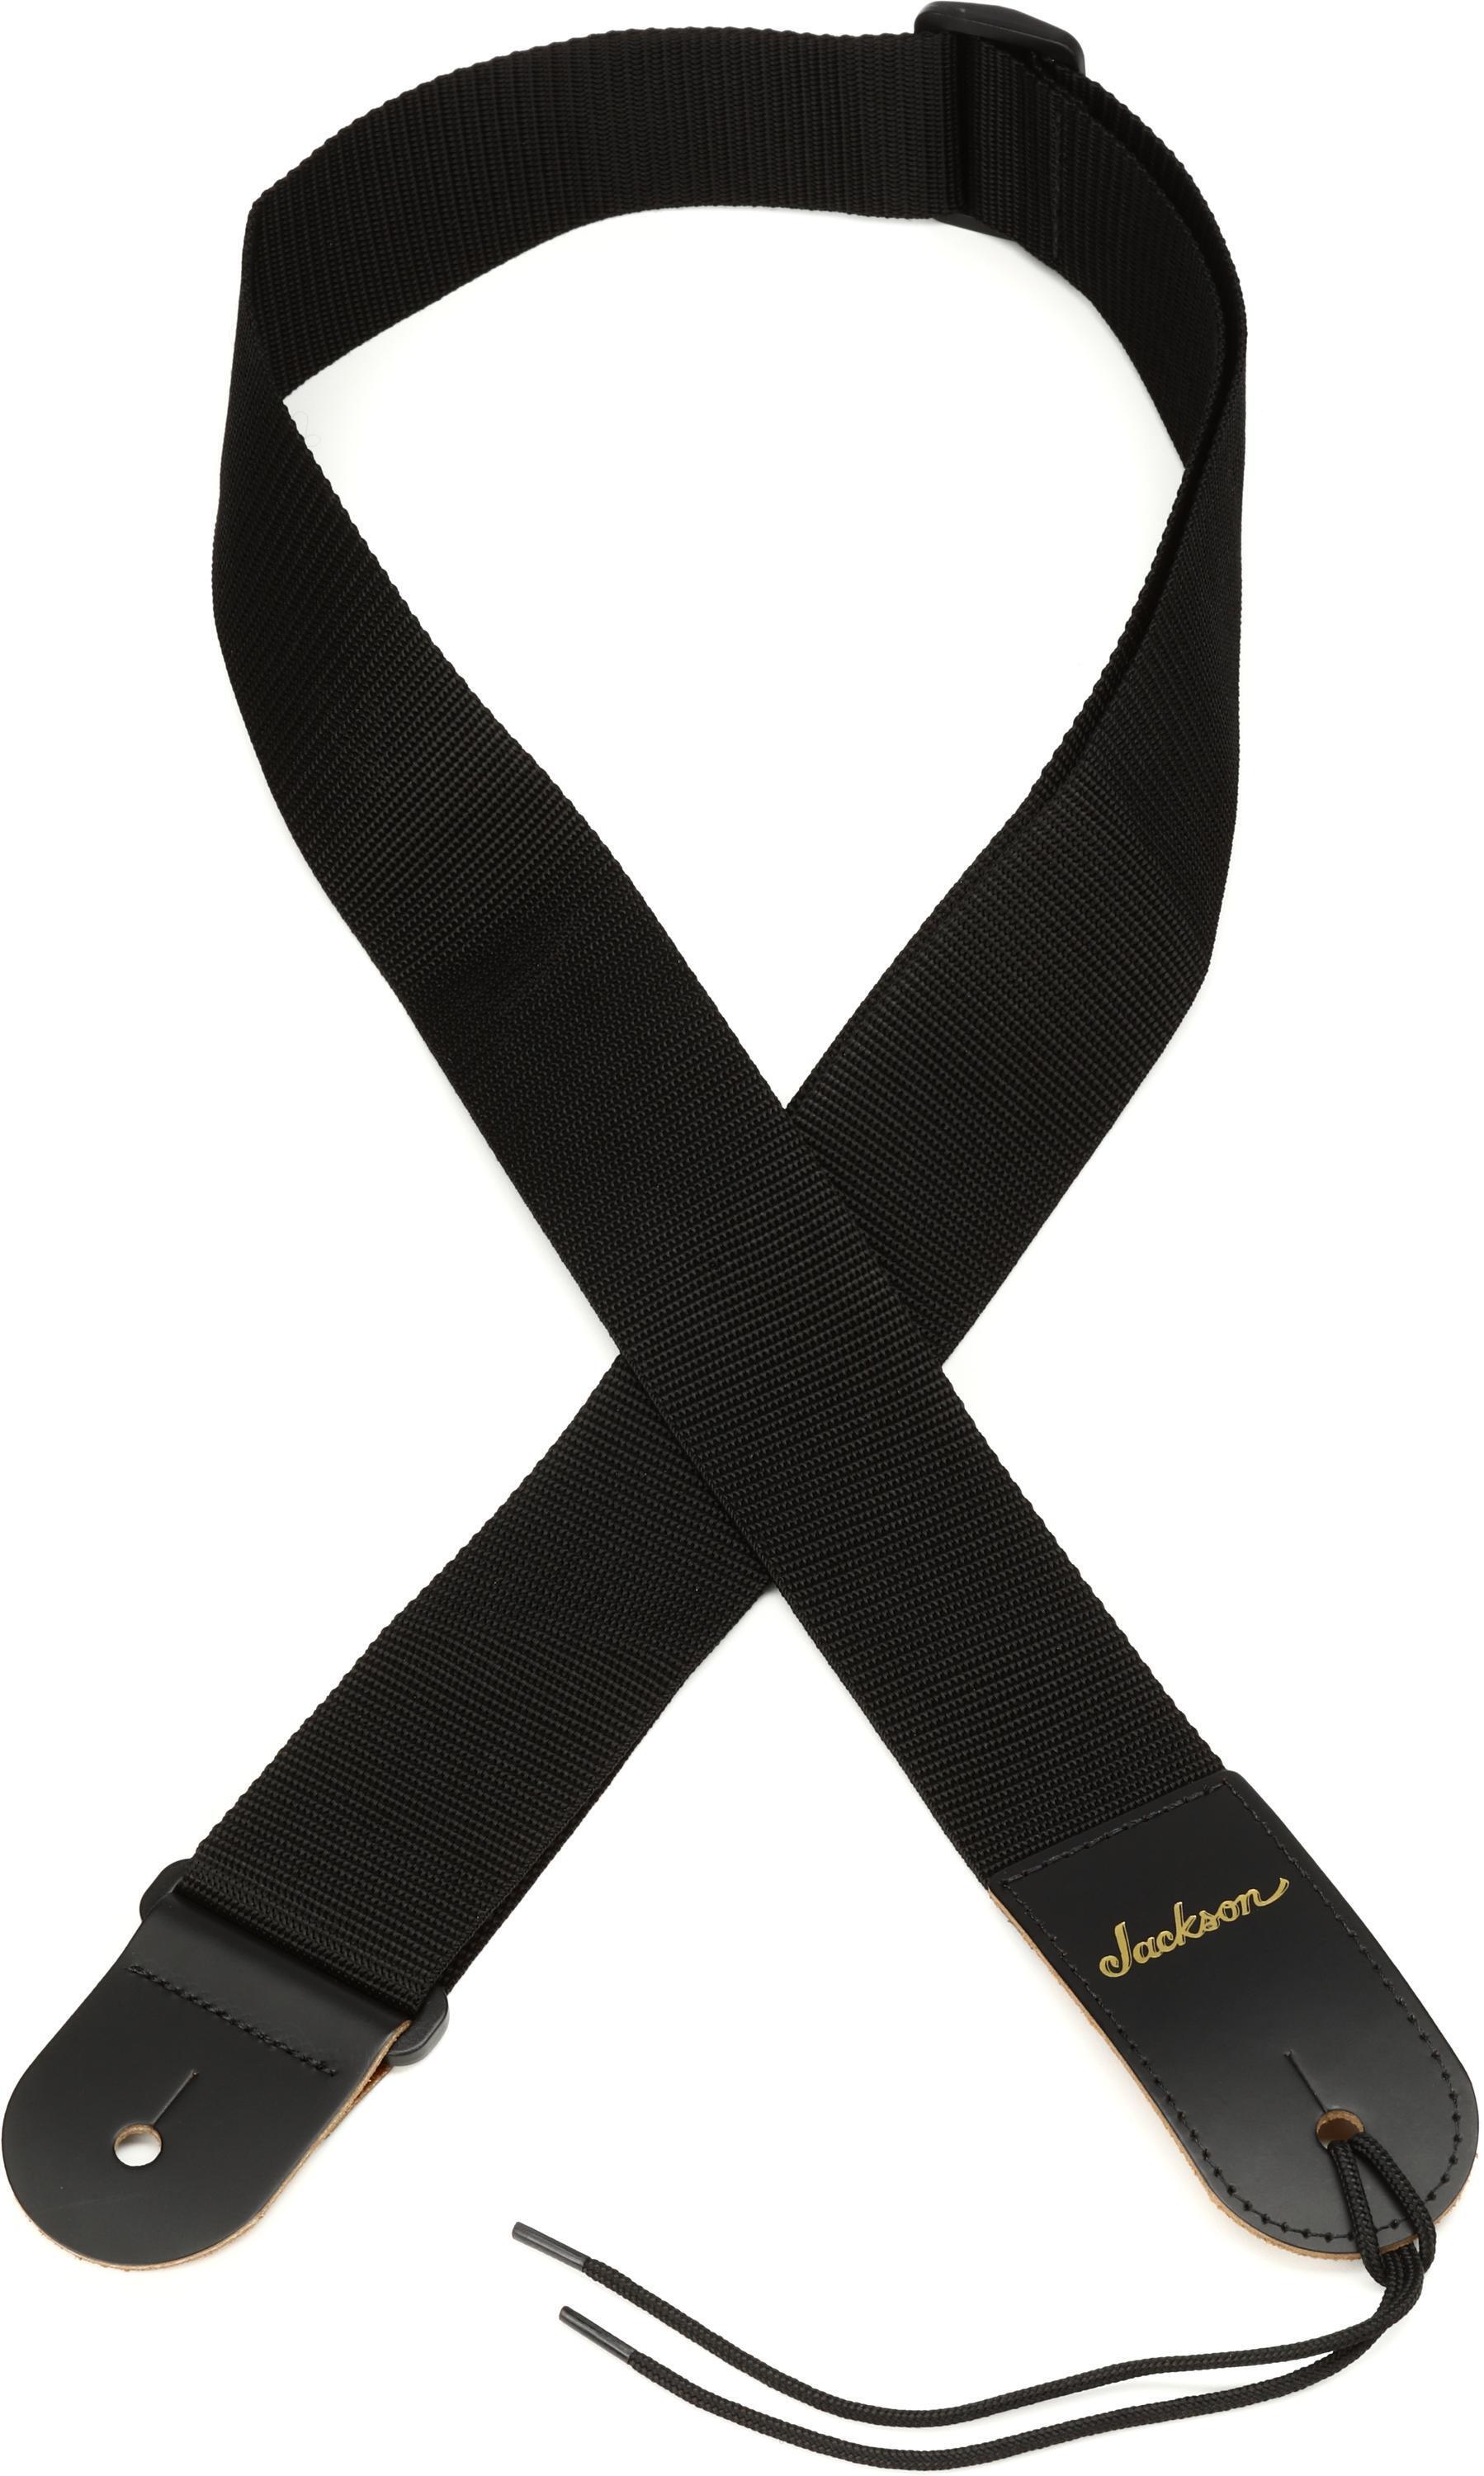 Jackson 2 Nylon Guitar Strap - Black with embroidered logo